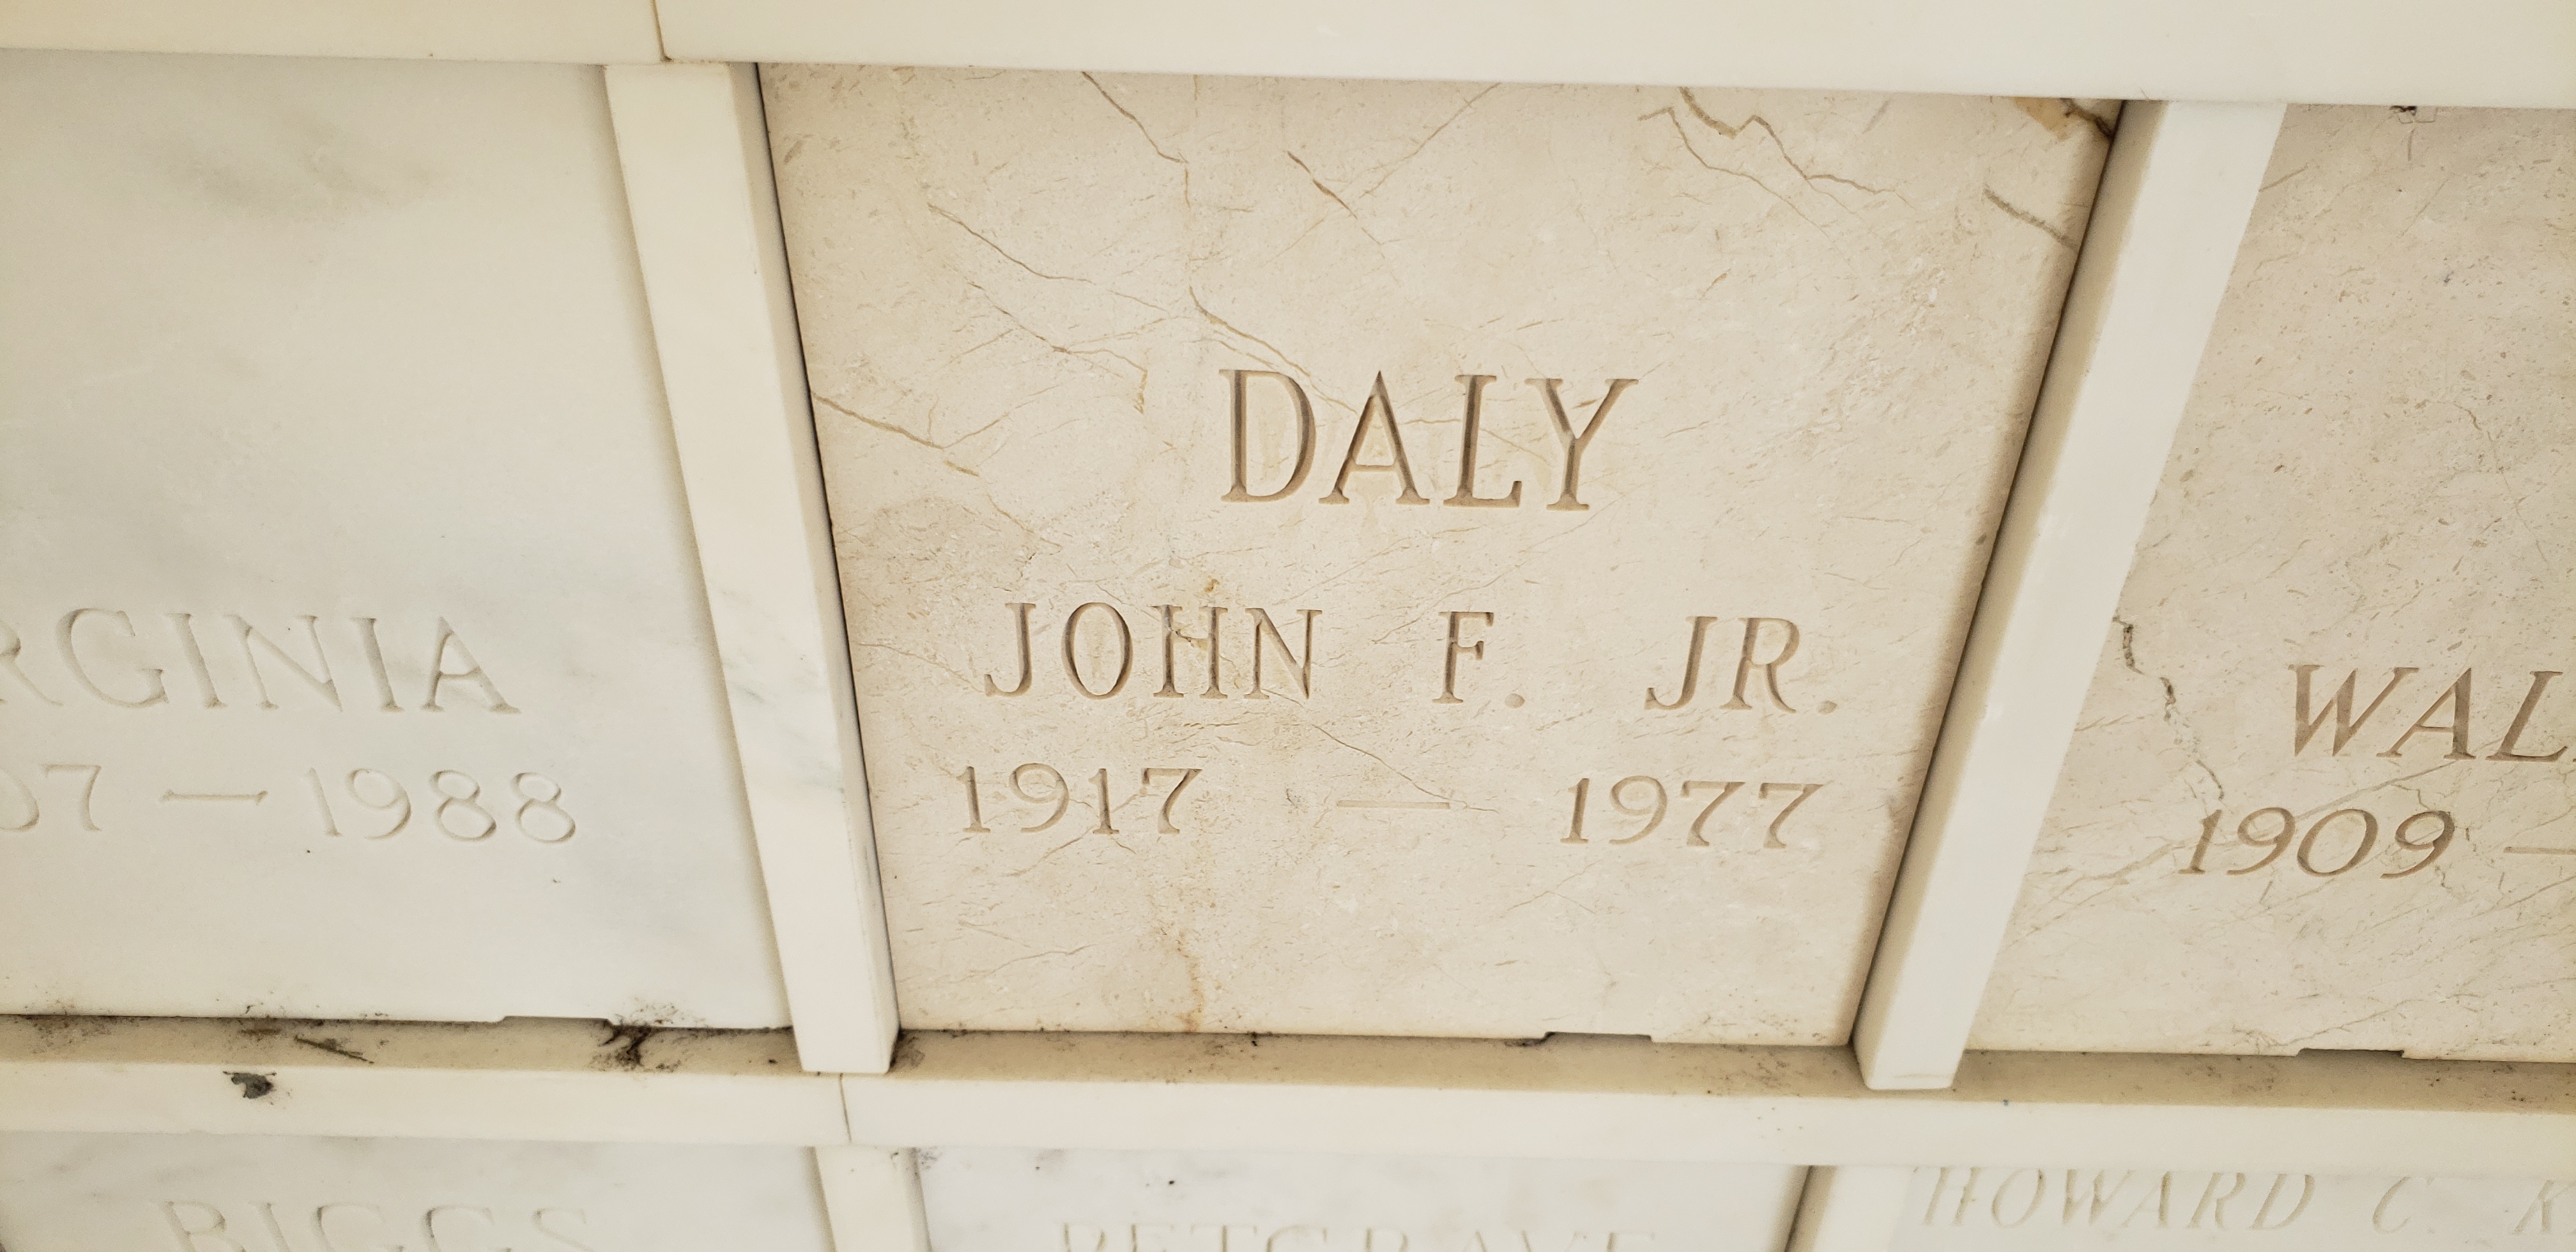 John F Daly, Jr